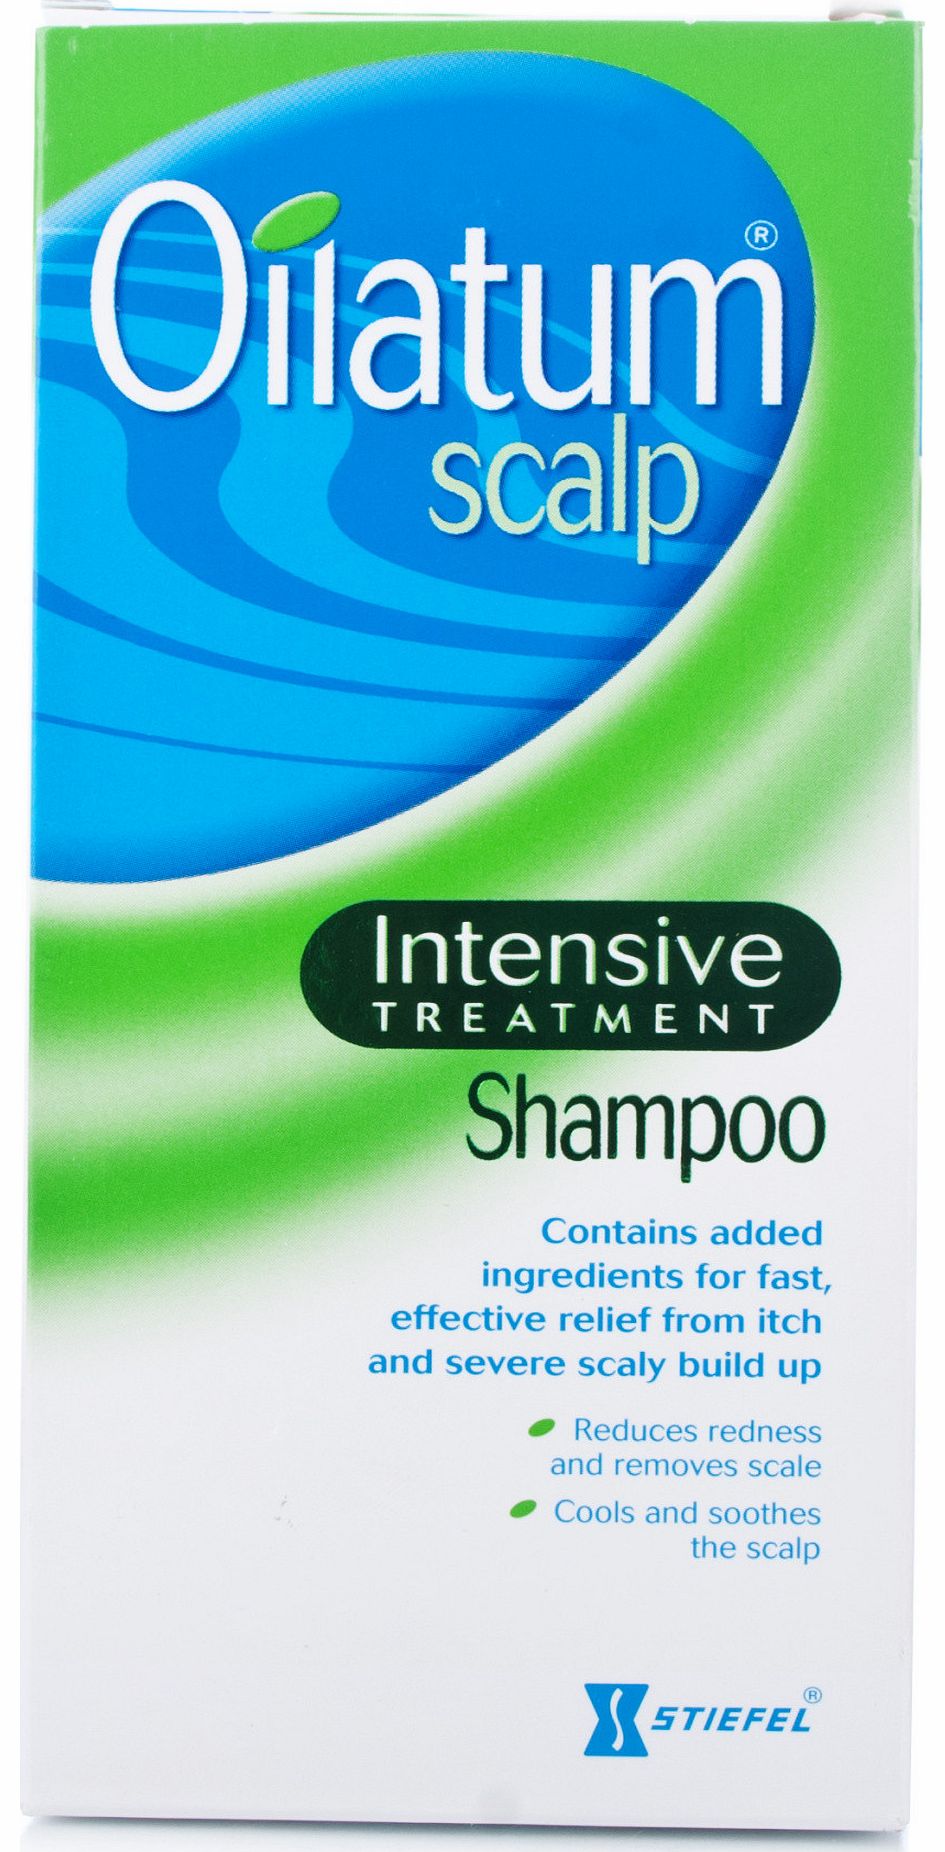 Oilatum Scalp Intensive Treatment Shampoo